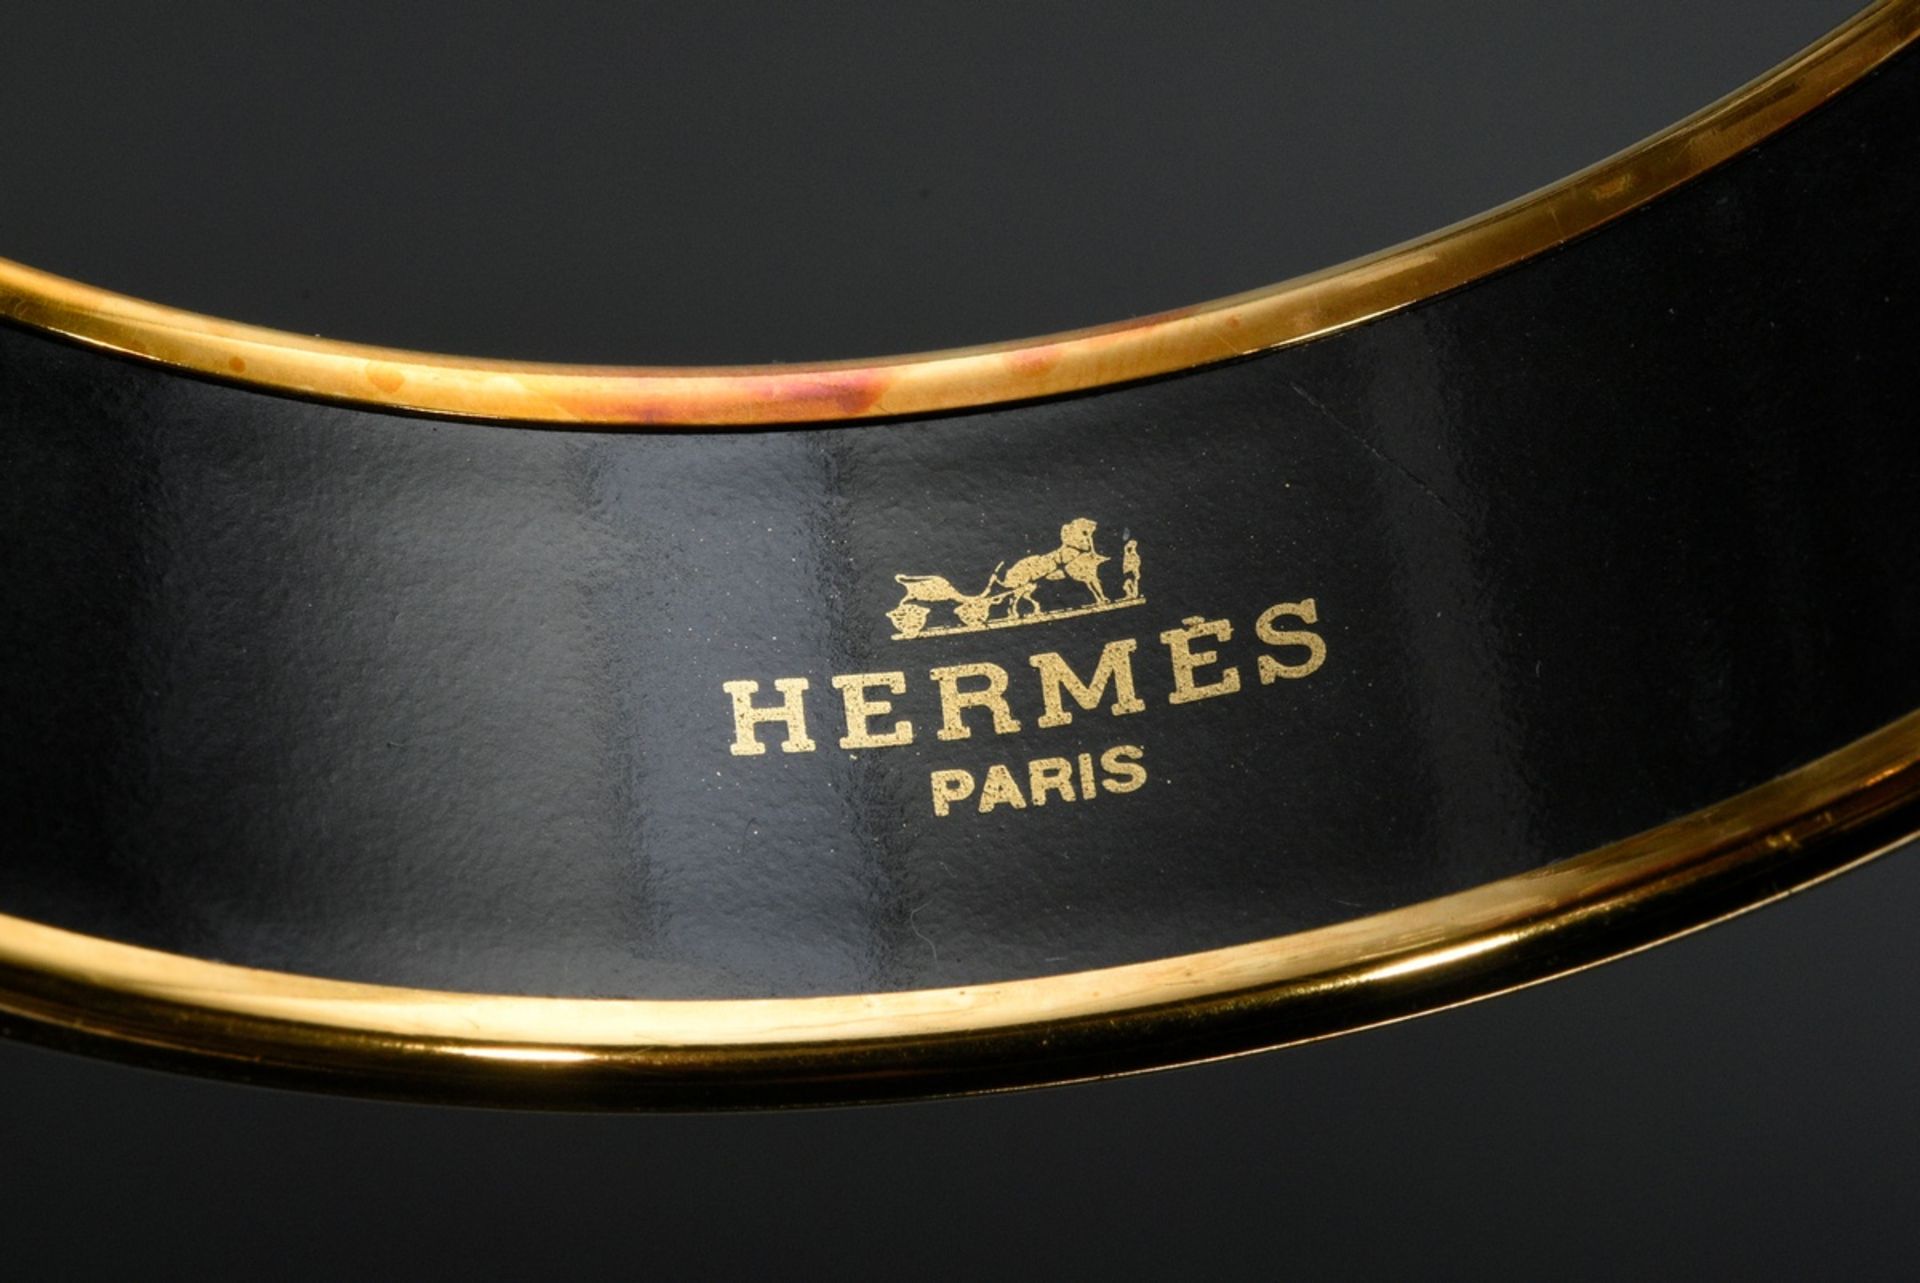 Wide Hermès bangle with brown and gold enamel print decoration "Schimmel und Quatenbänder", gilded  - Image 4 of 4